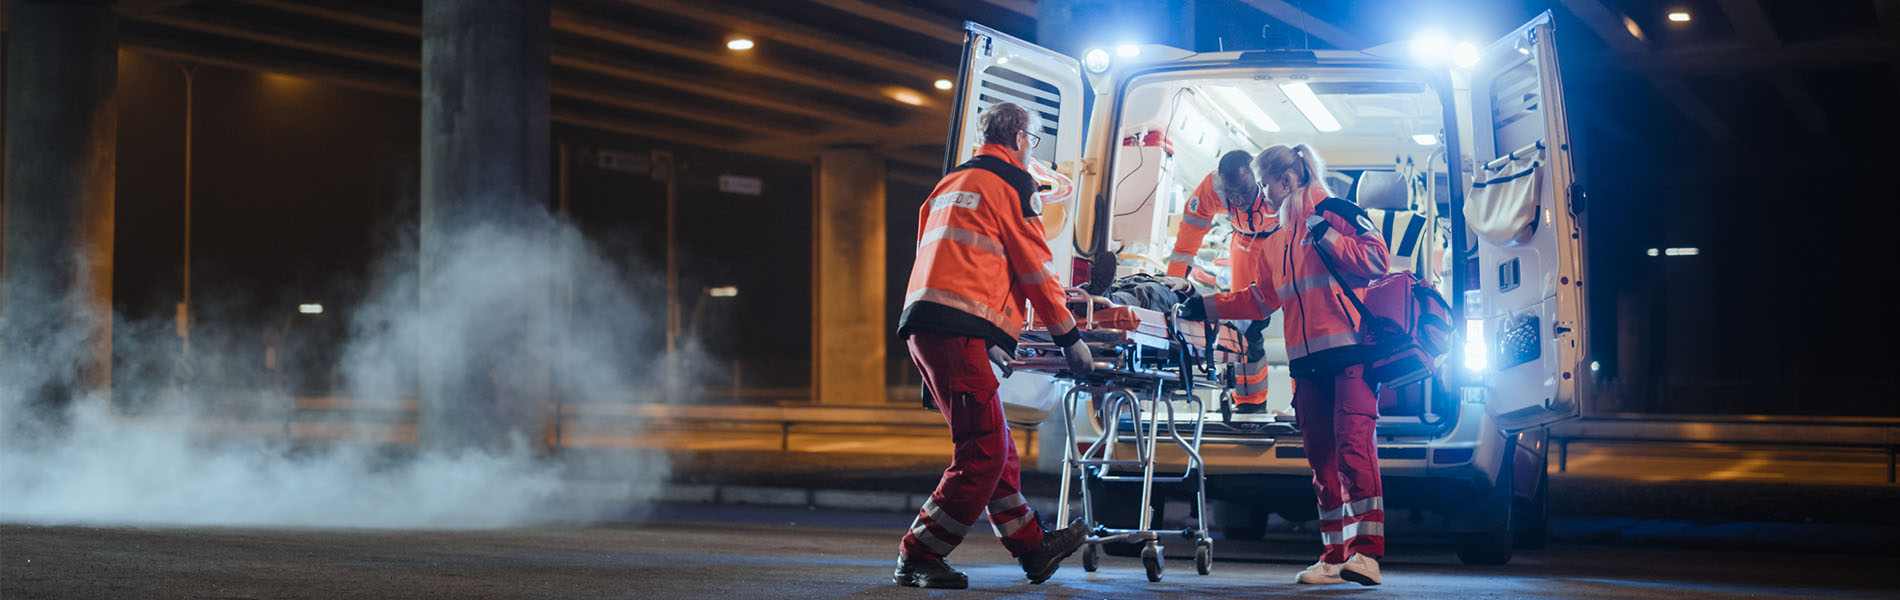 EMS crew wheeling patient into ambulance